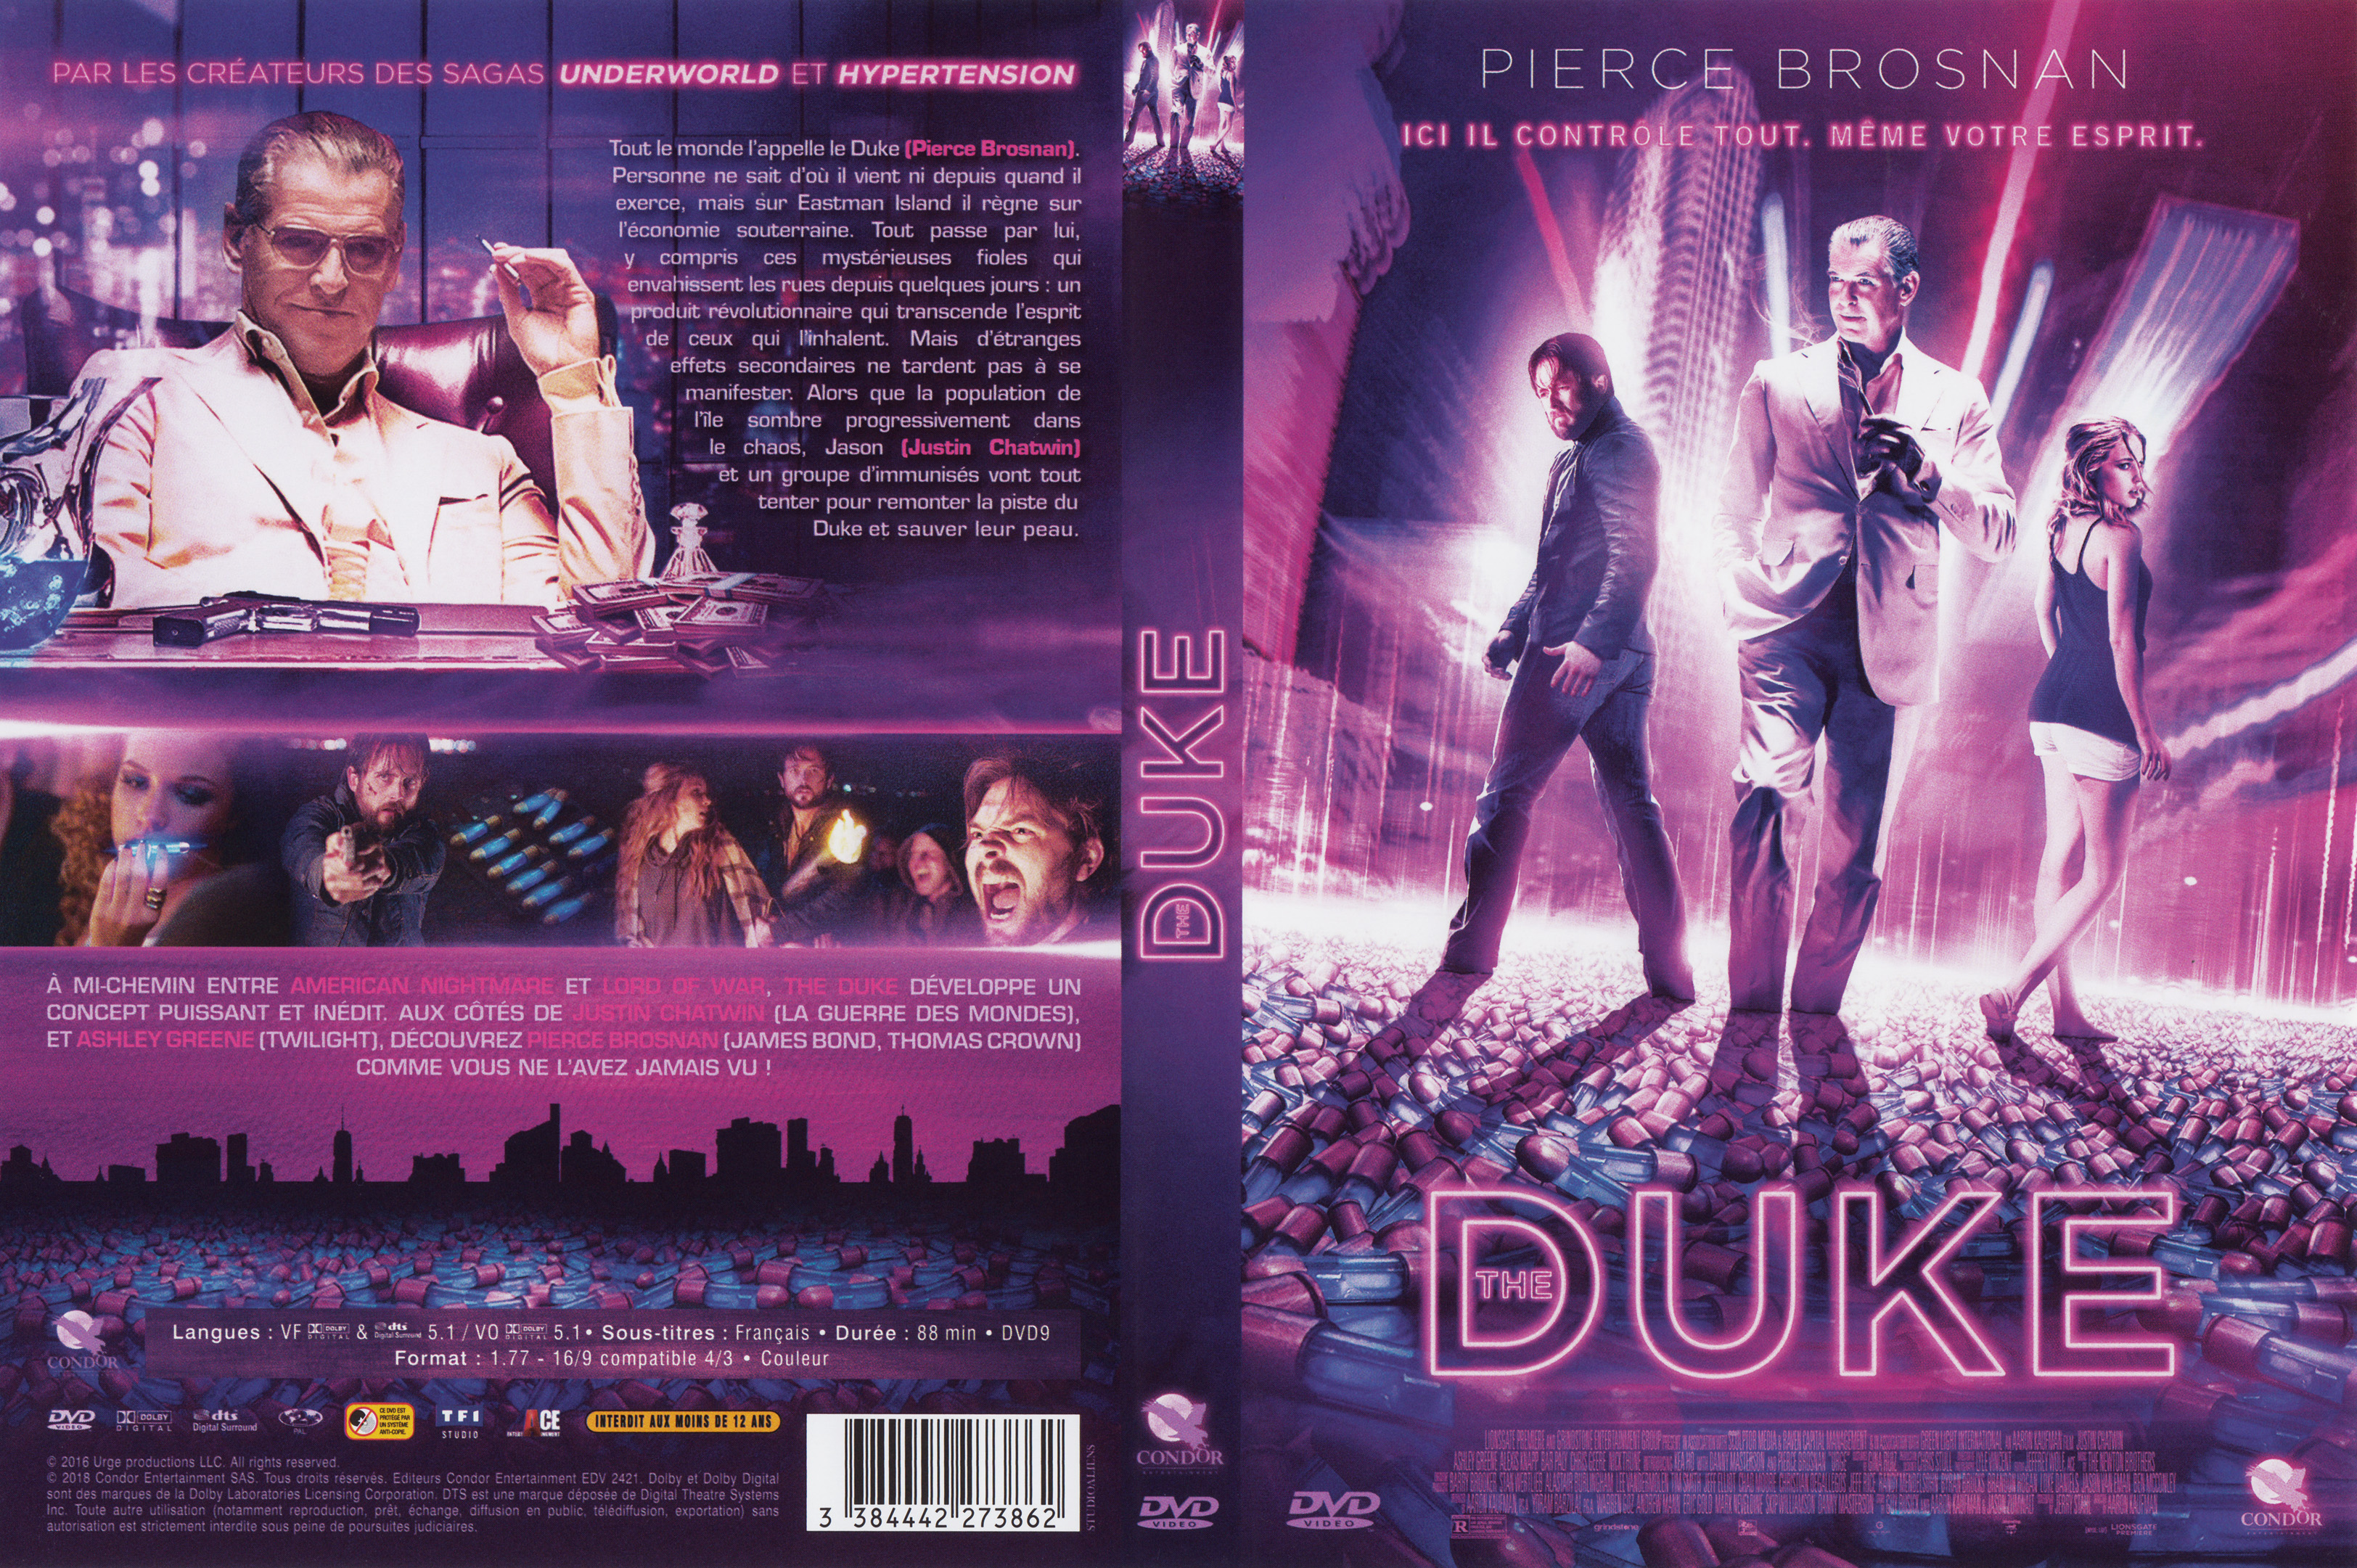 Jaquette DVD The duke